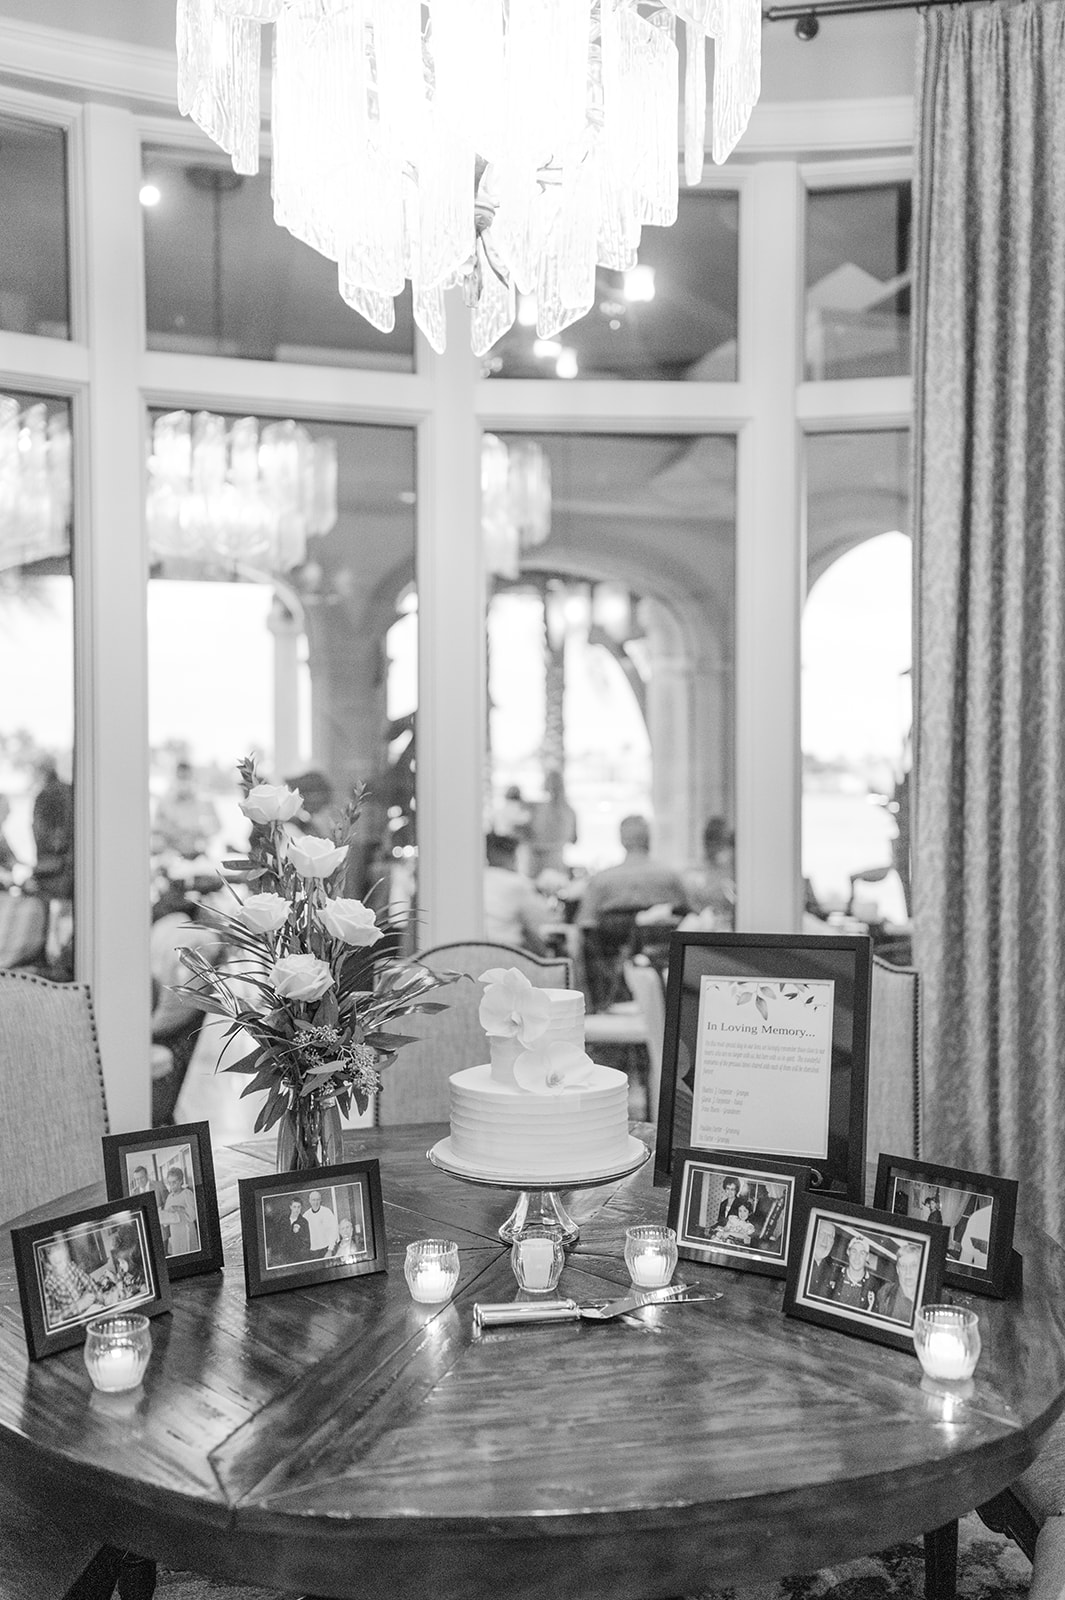 Naples Florida wedding photographer captures the beautiful wedding cake
